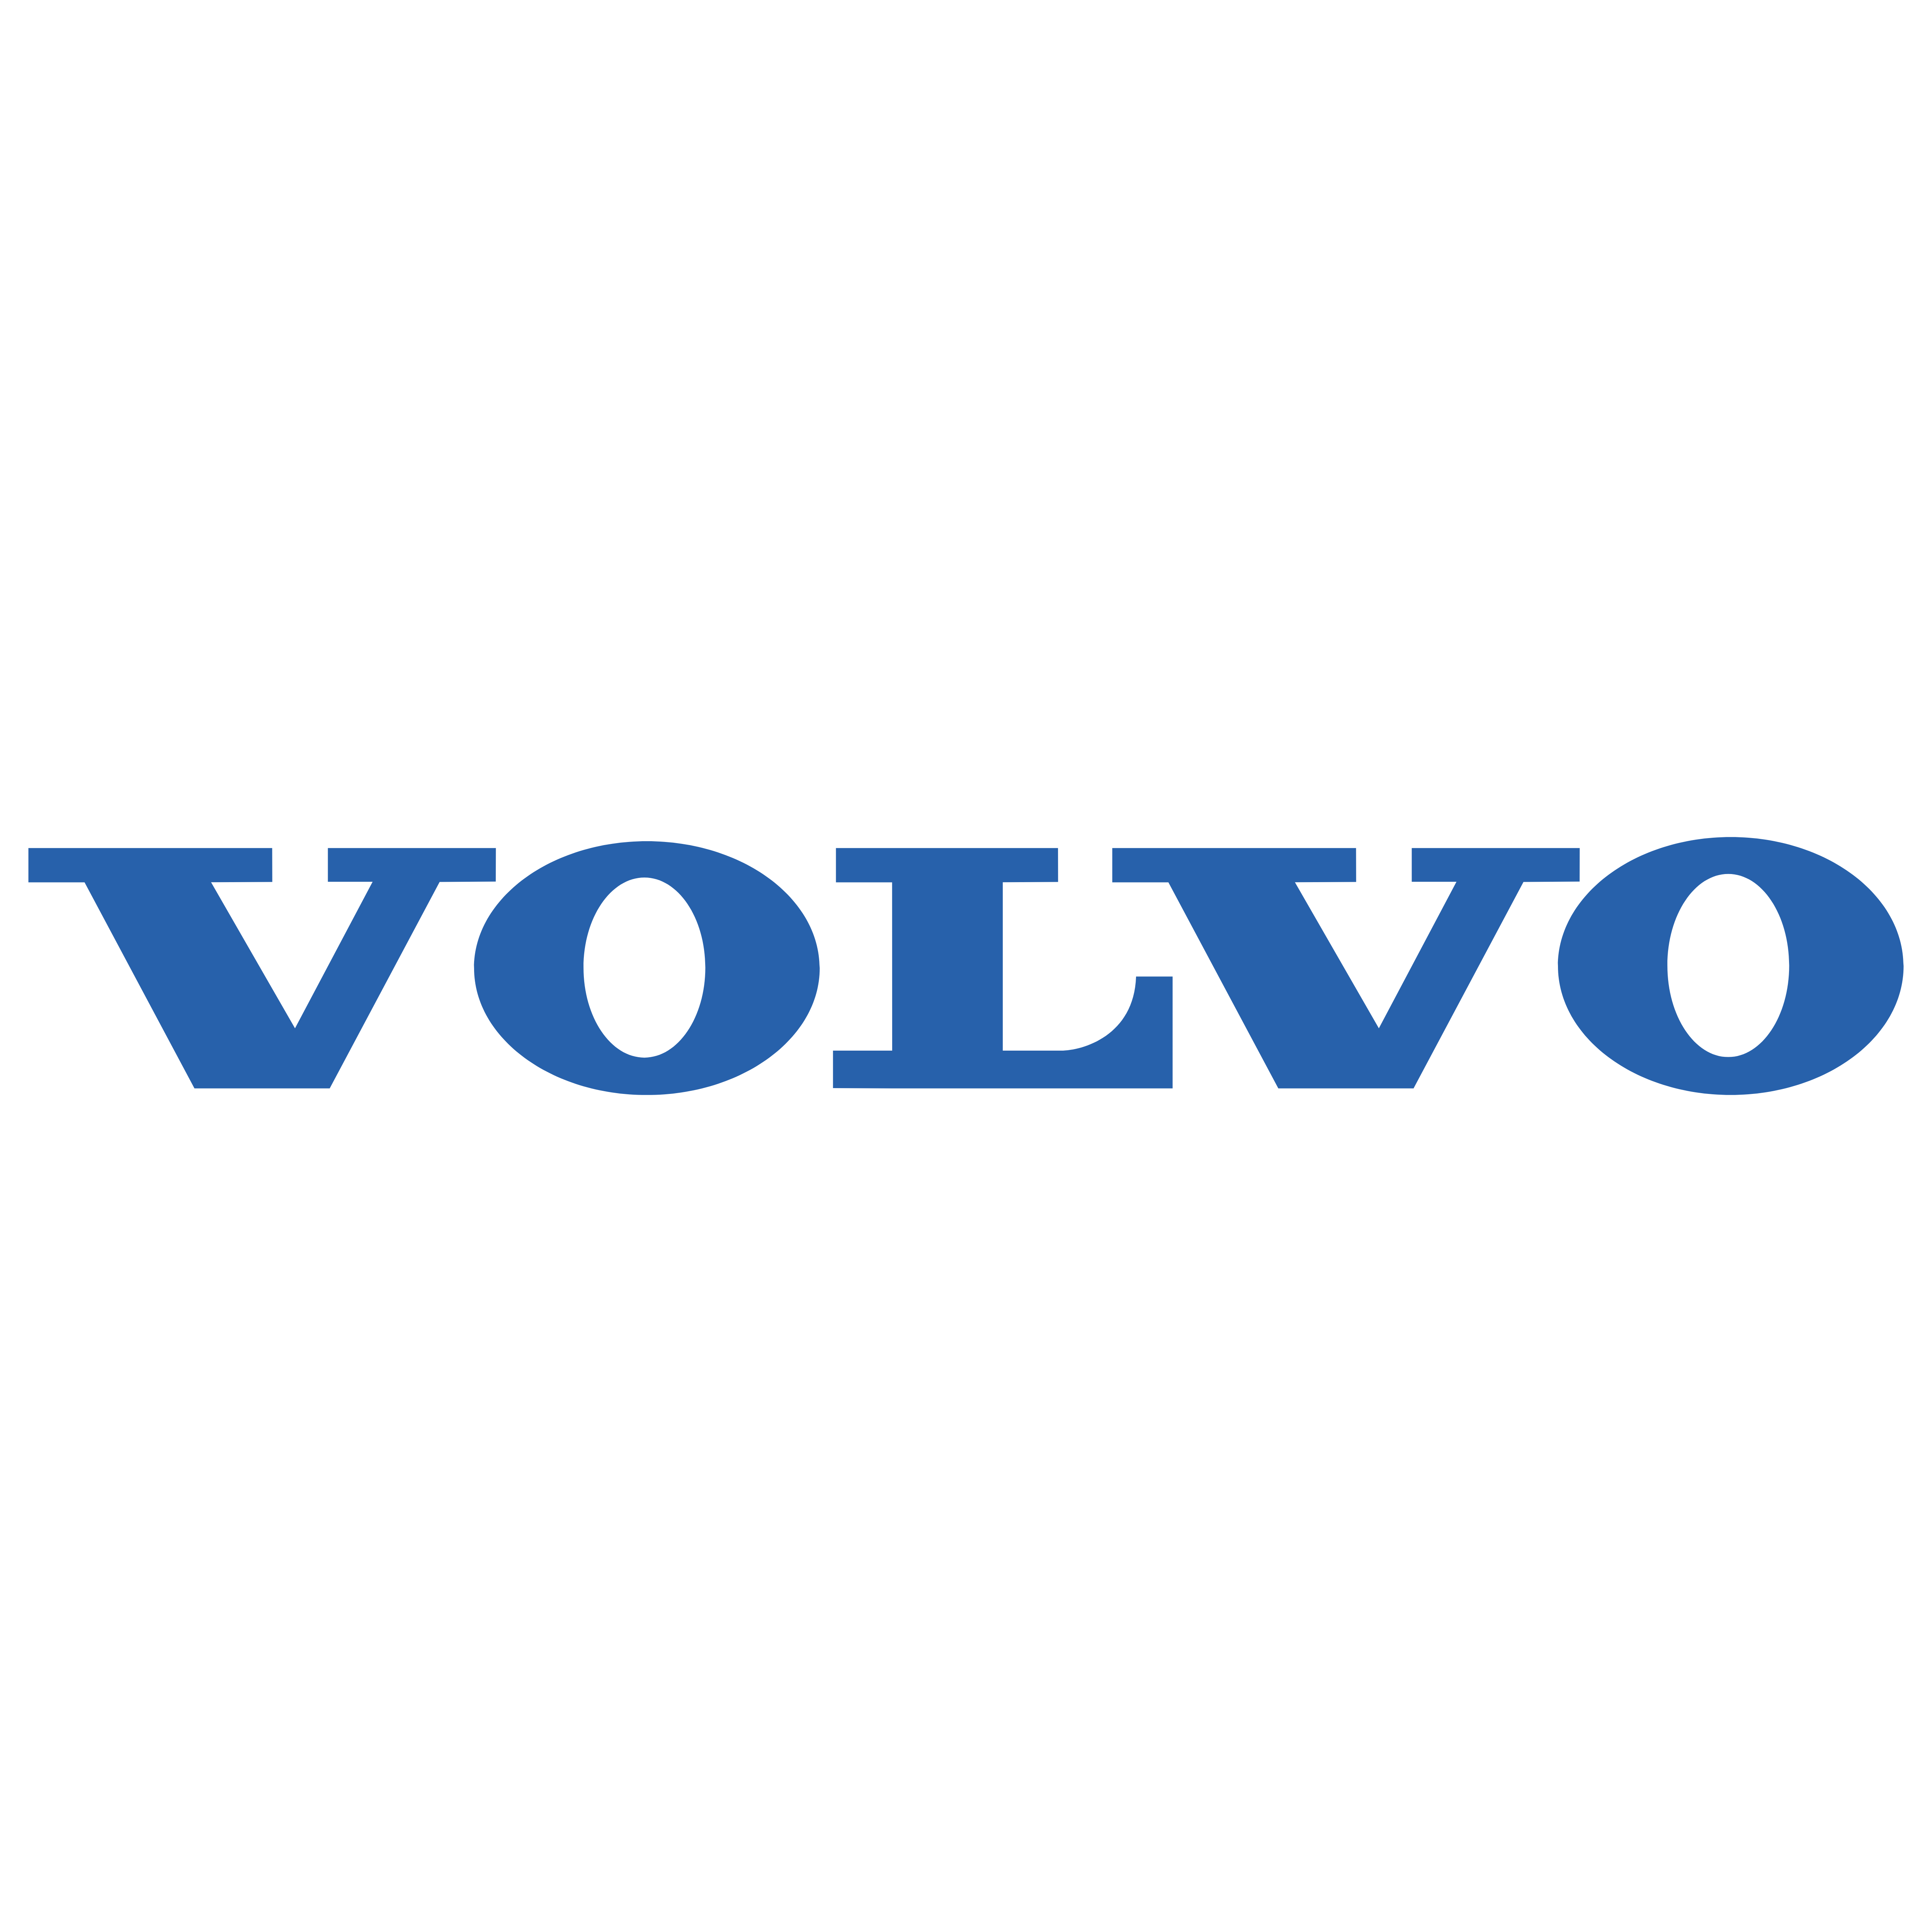 Volvo Logo Png & Free Vol